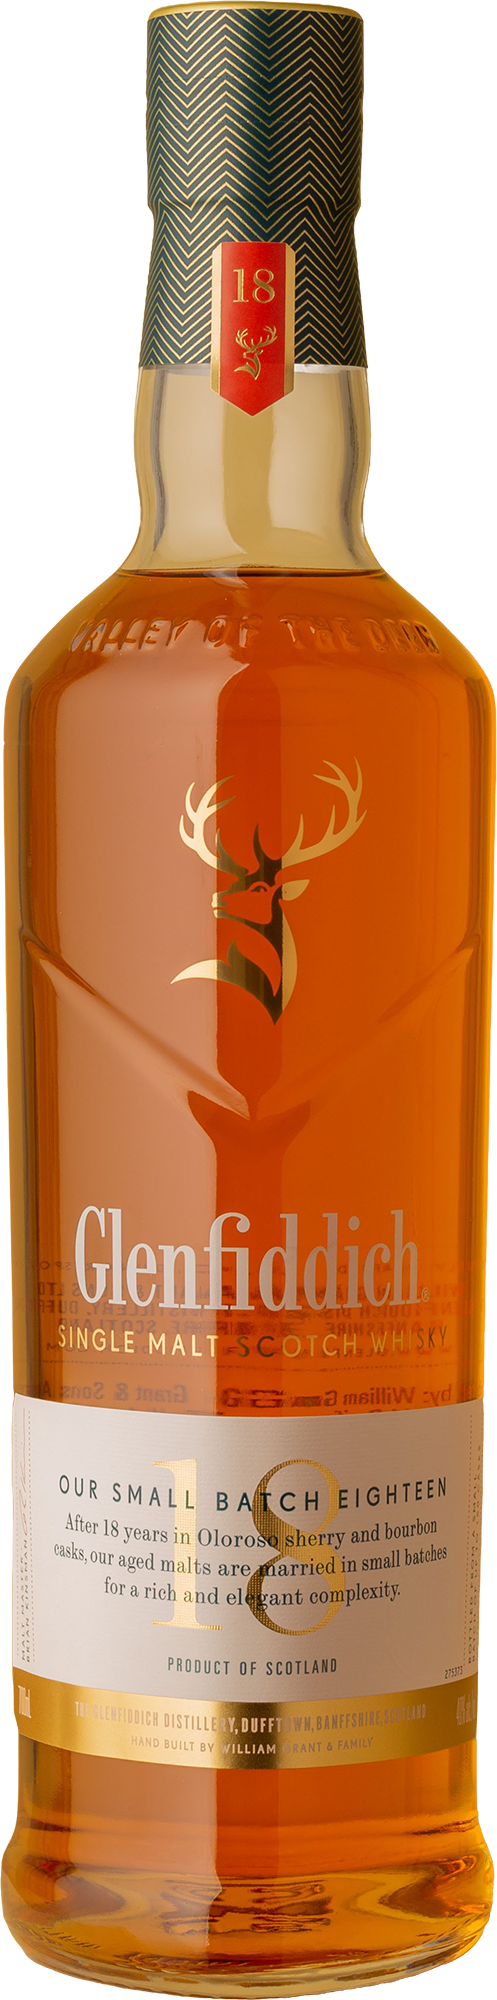 Glenfiddich Small Batch Eighteen Single Malt Scotch Whisky 18 Year Old  [700ml]